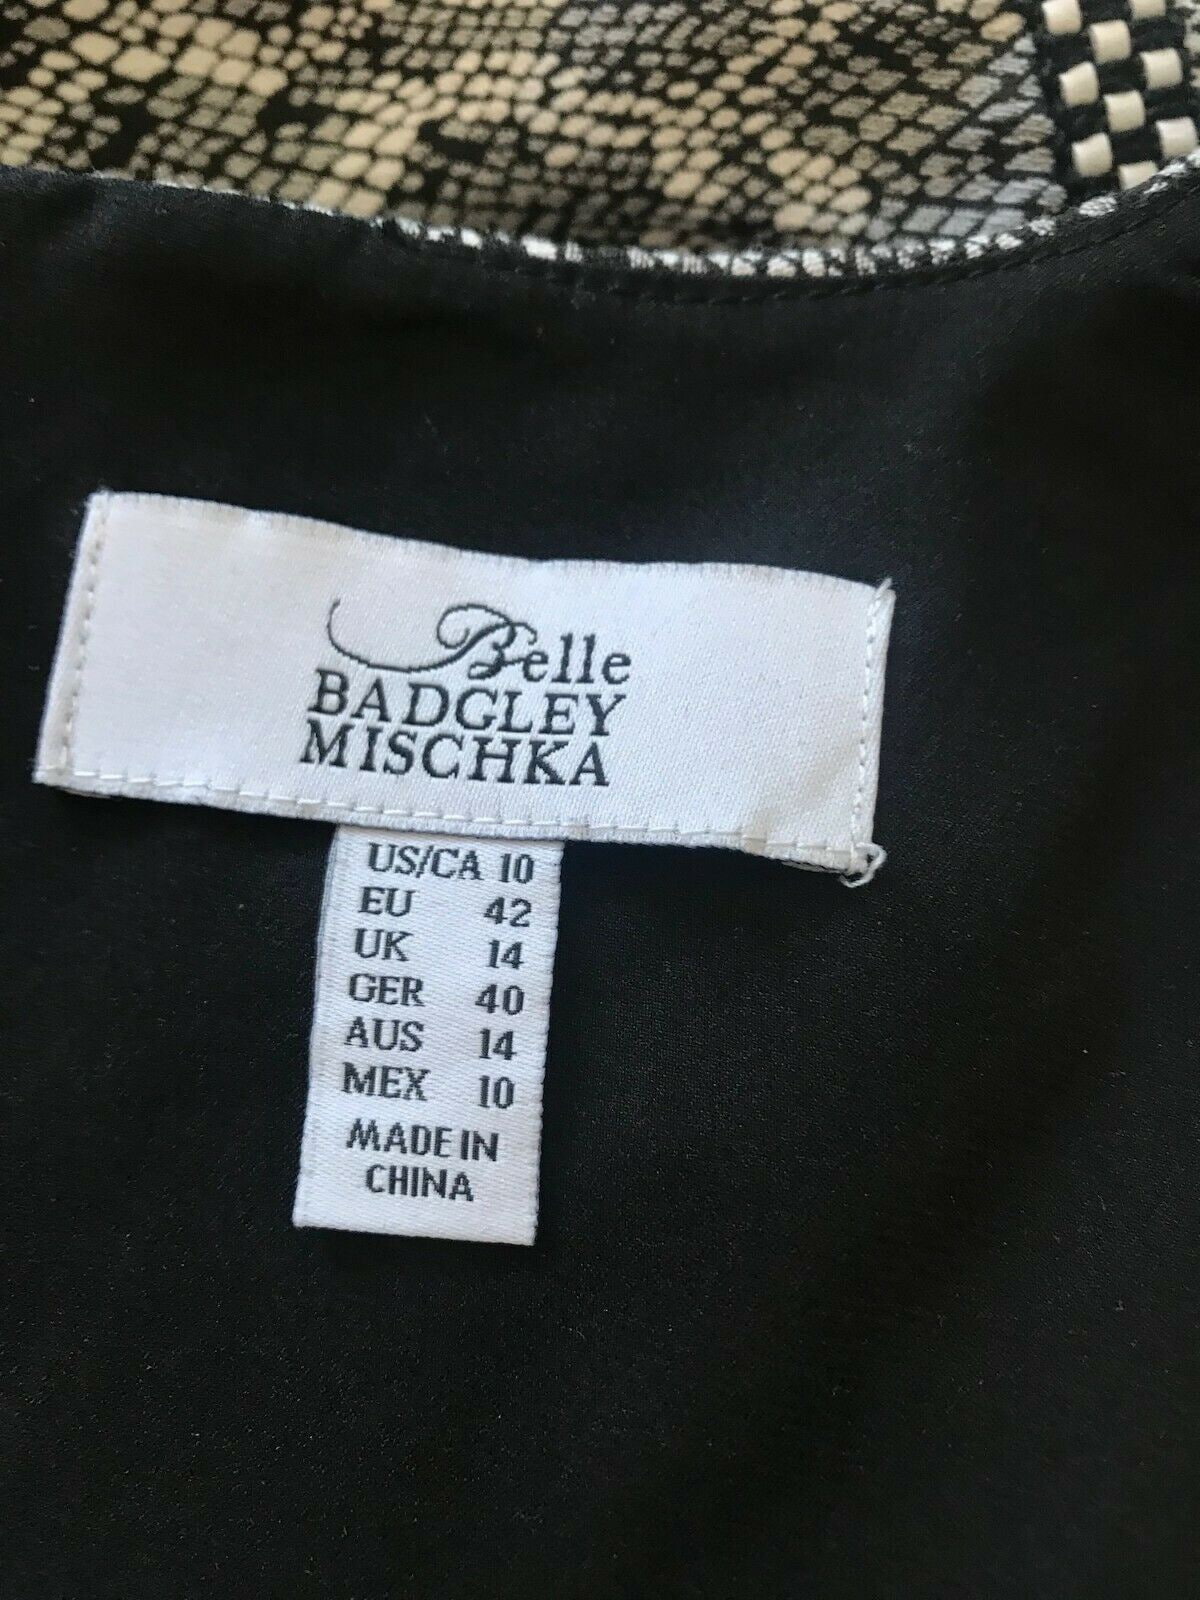 Badgley Mischka Belle Black & White Snakeskin Pencil Dress RRP £228 UK 14 US 10 EU 42 IT 46 Timeless Fashions